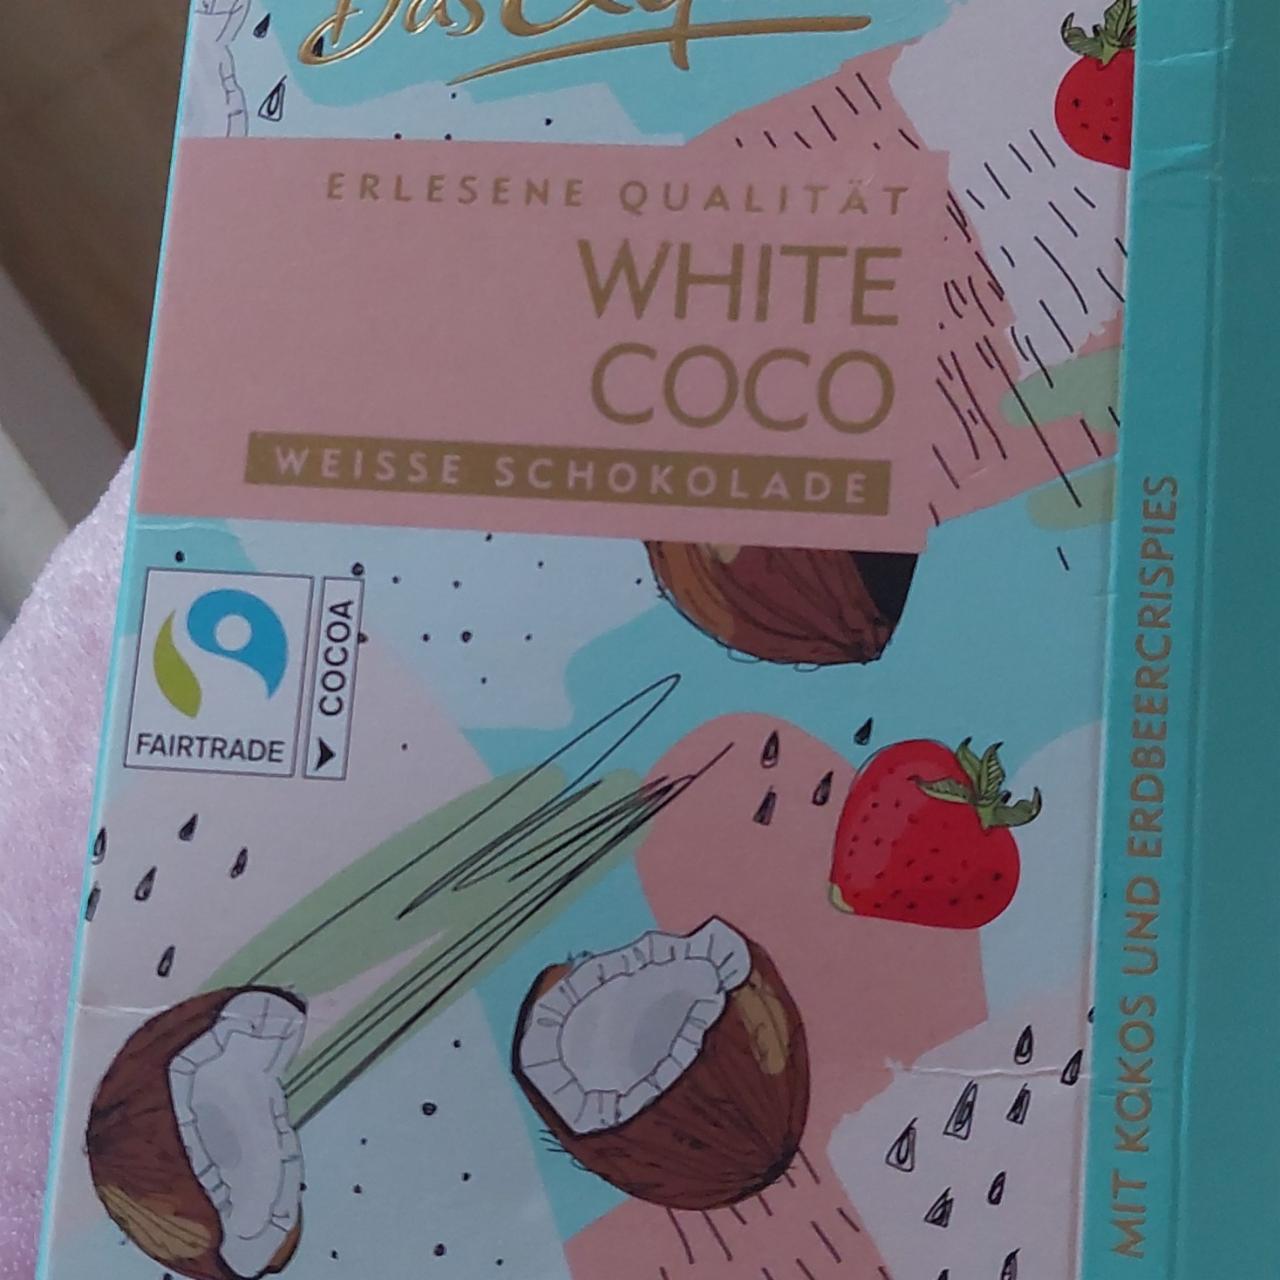 Zdjęcia - White coco kokos Erdbeercrispies Das Exquisite